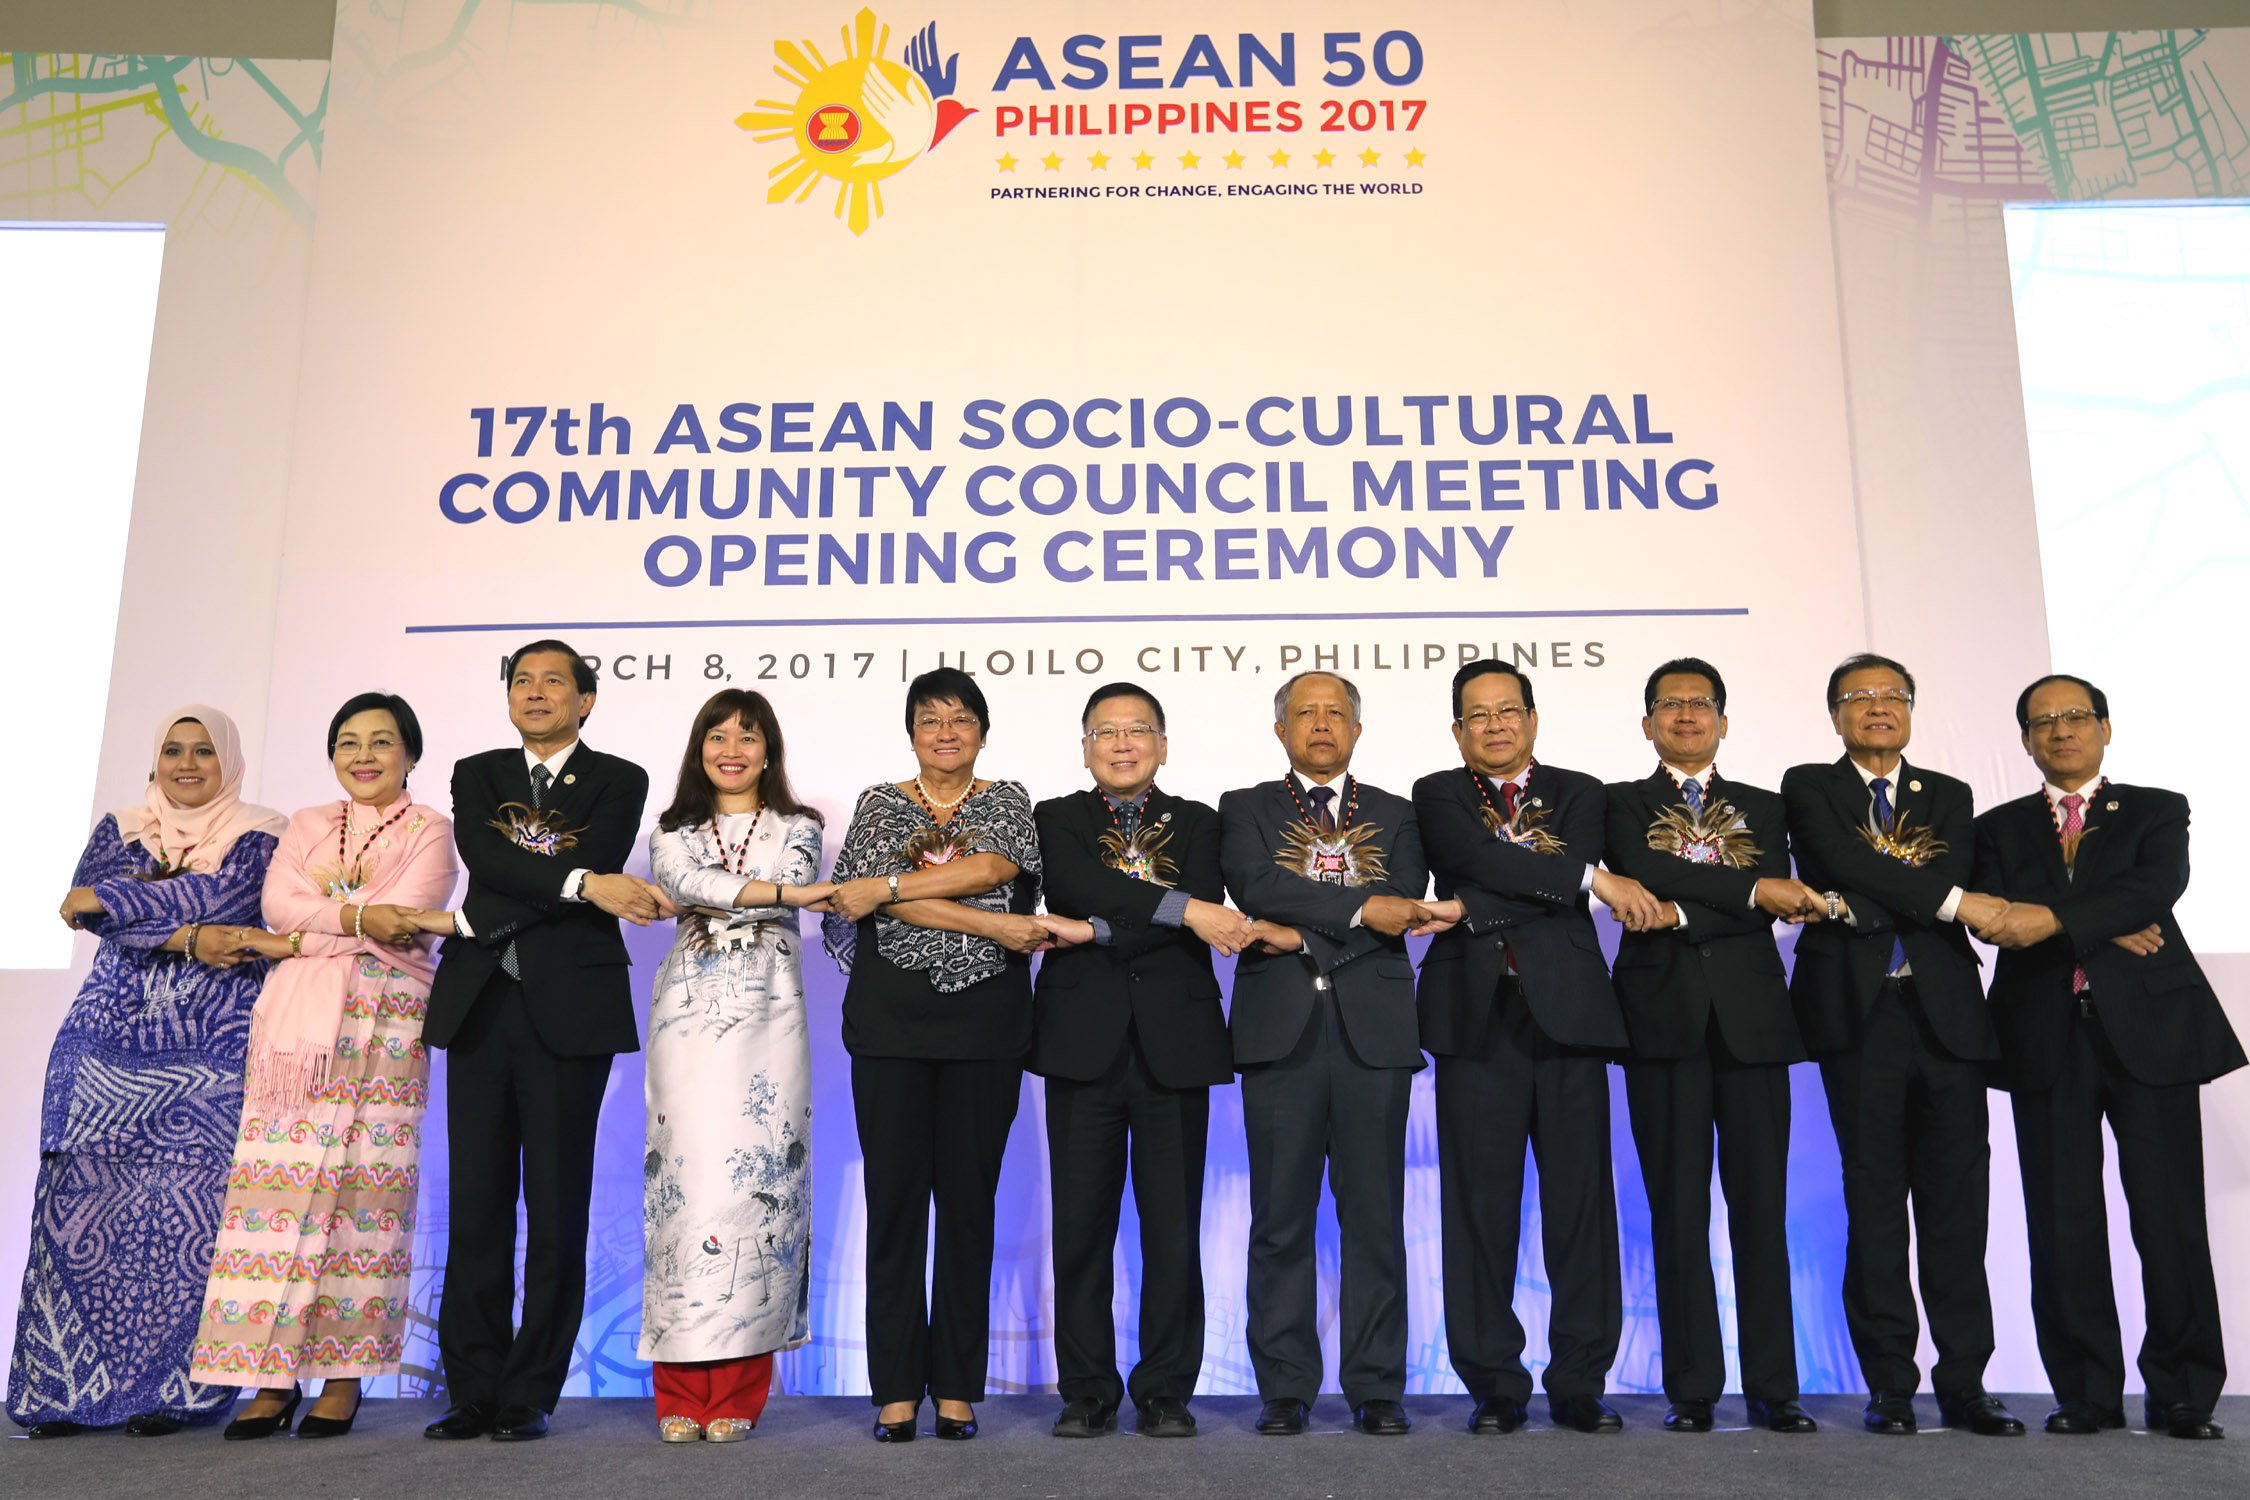 ASEAN Socio-Cultural Community Council Meeting starts